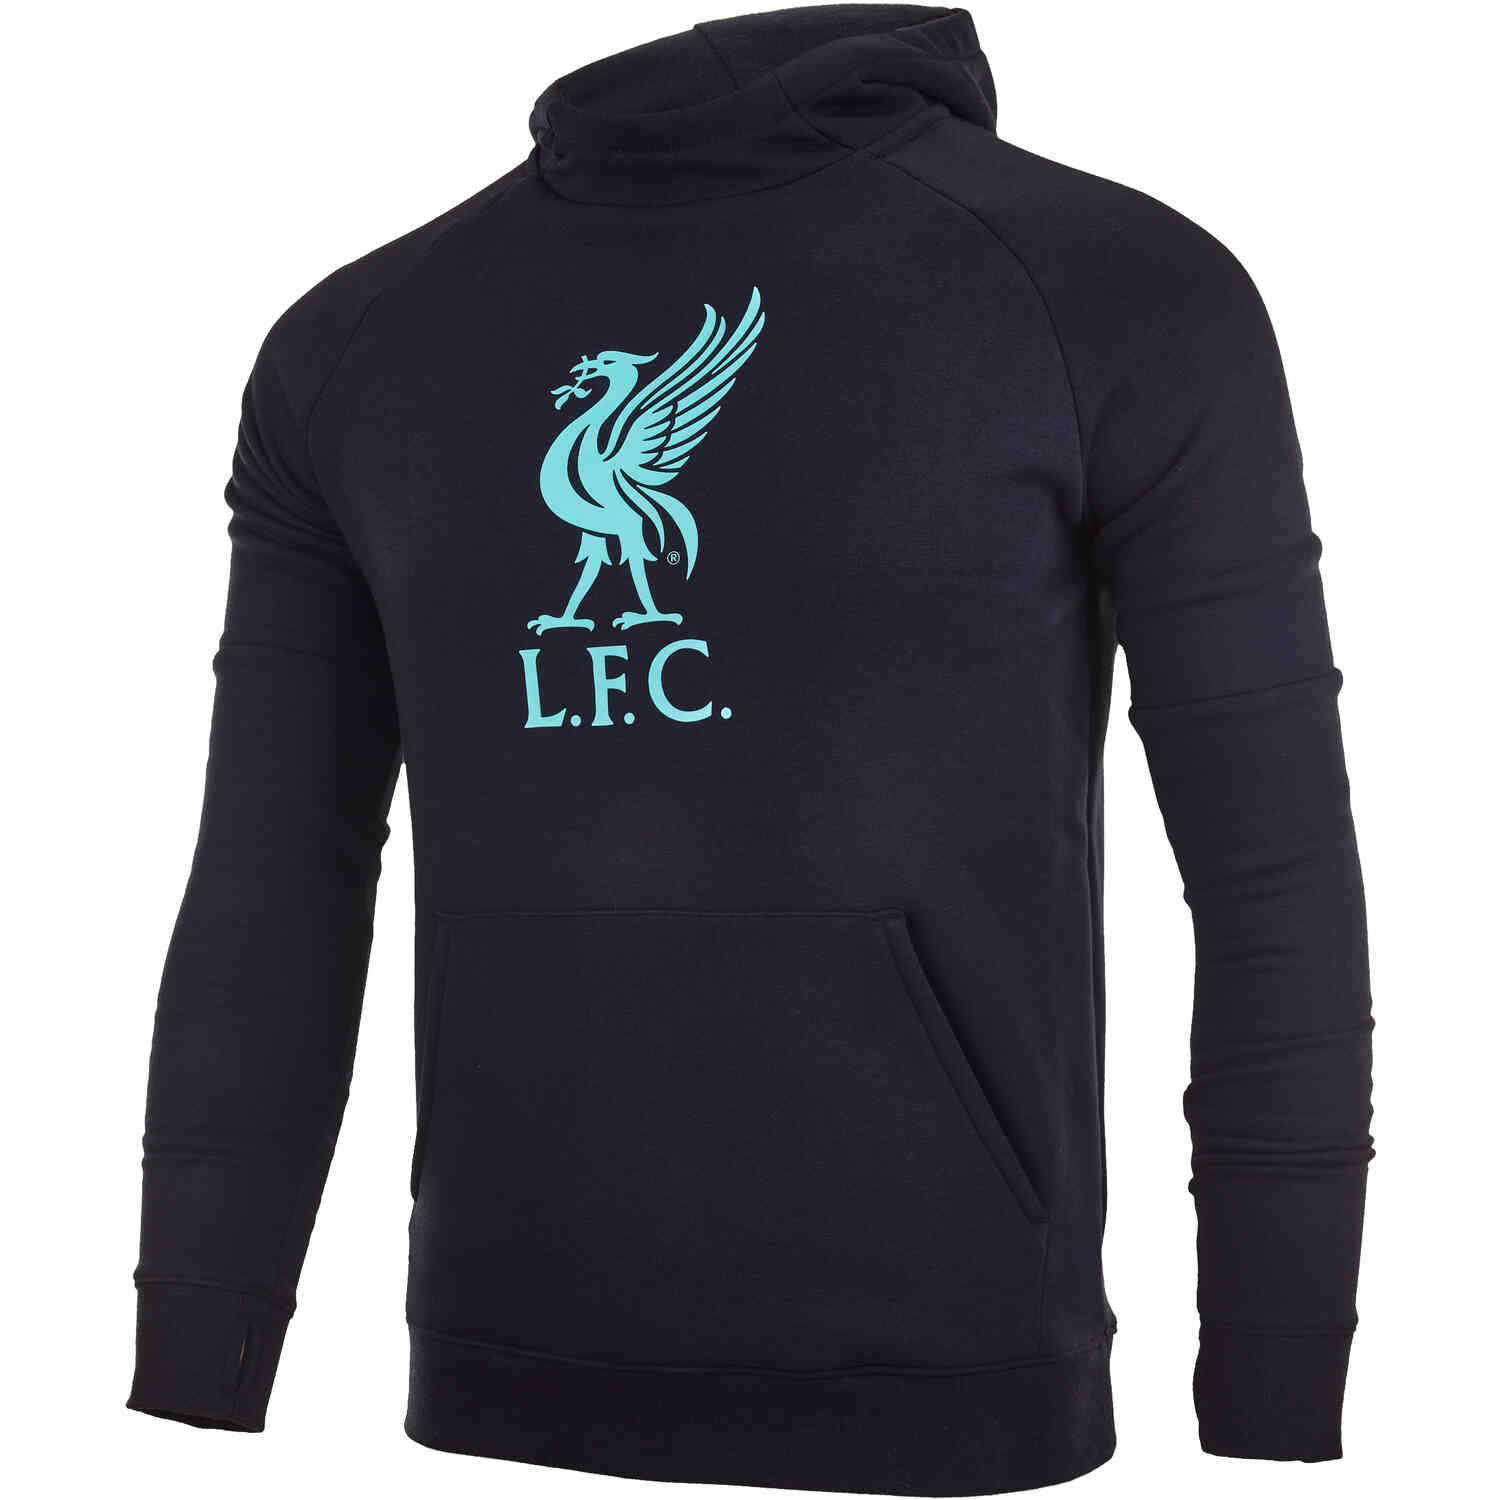 Kids Nike Liverpool Pullover Fleece Hoodie - Black/Hyper Turq - Soccer ...